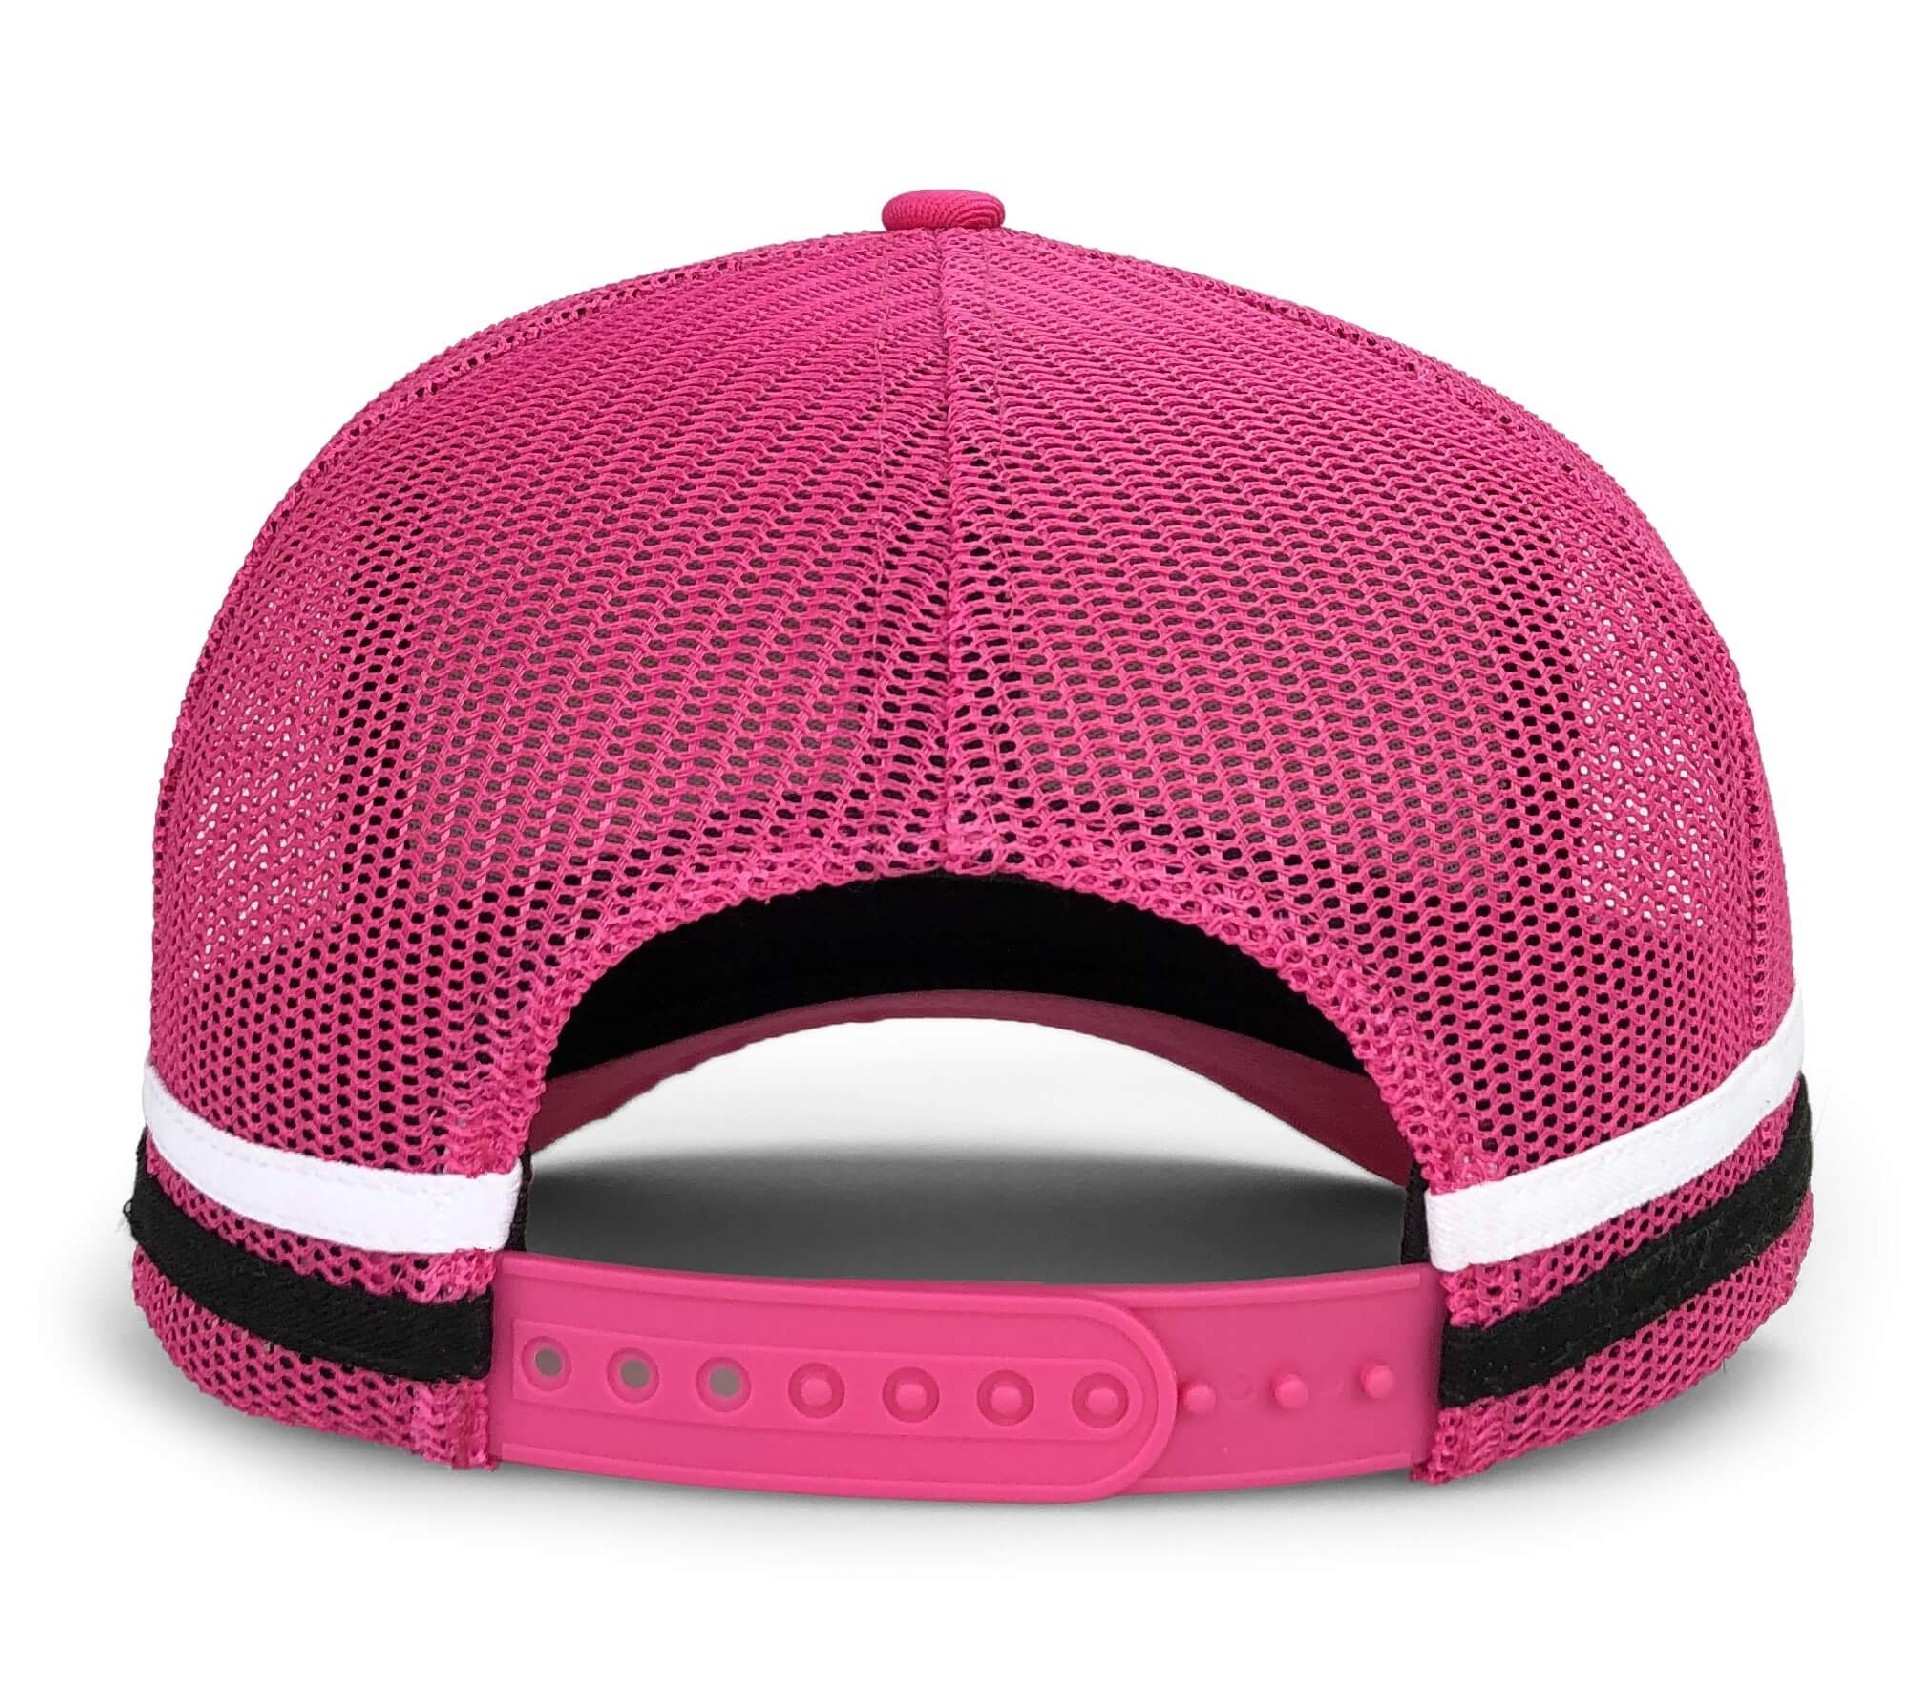 CTC-3010(Australia Country Trucker Caps 3D Custom Embroidery Logo 5 Panel High Profile Pink Trucker Cap Hat)